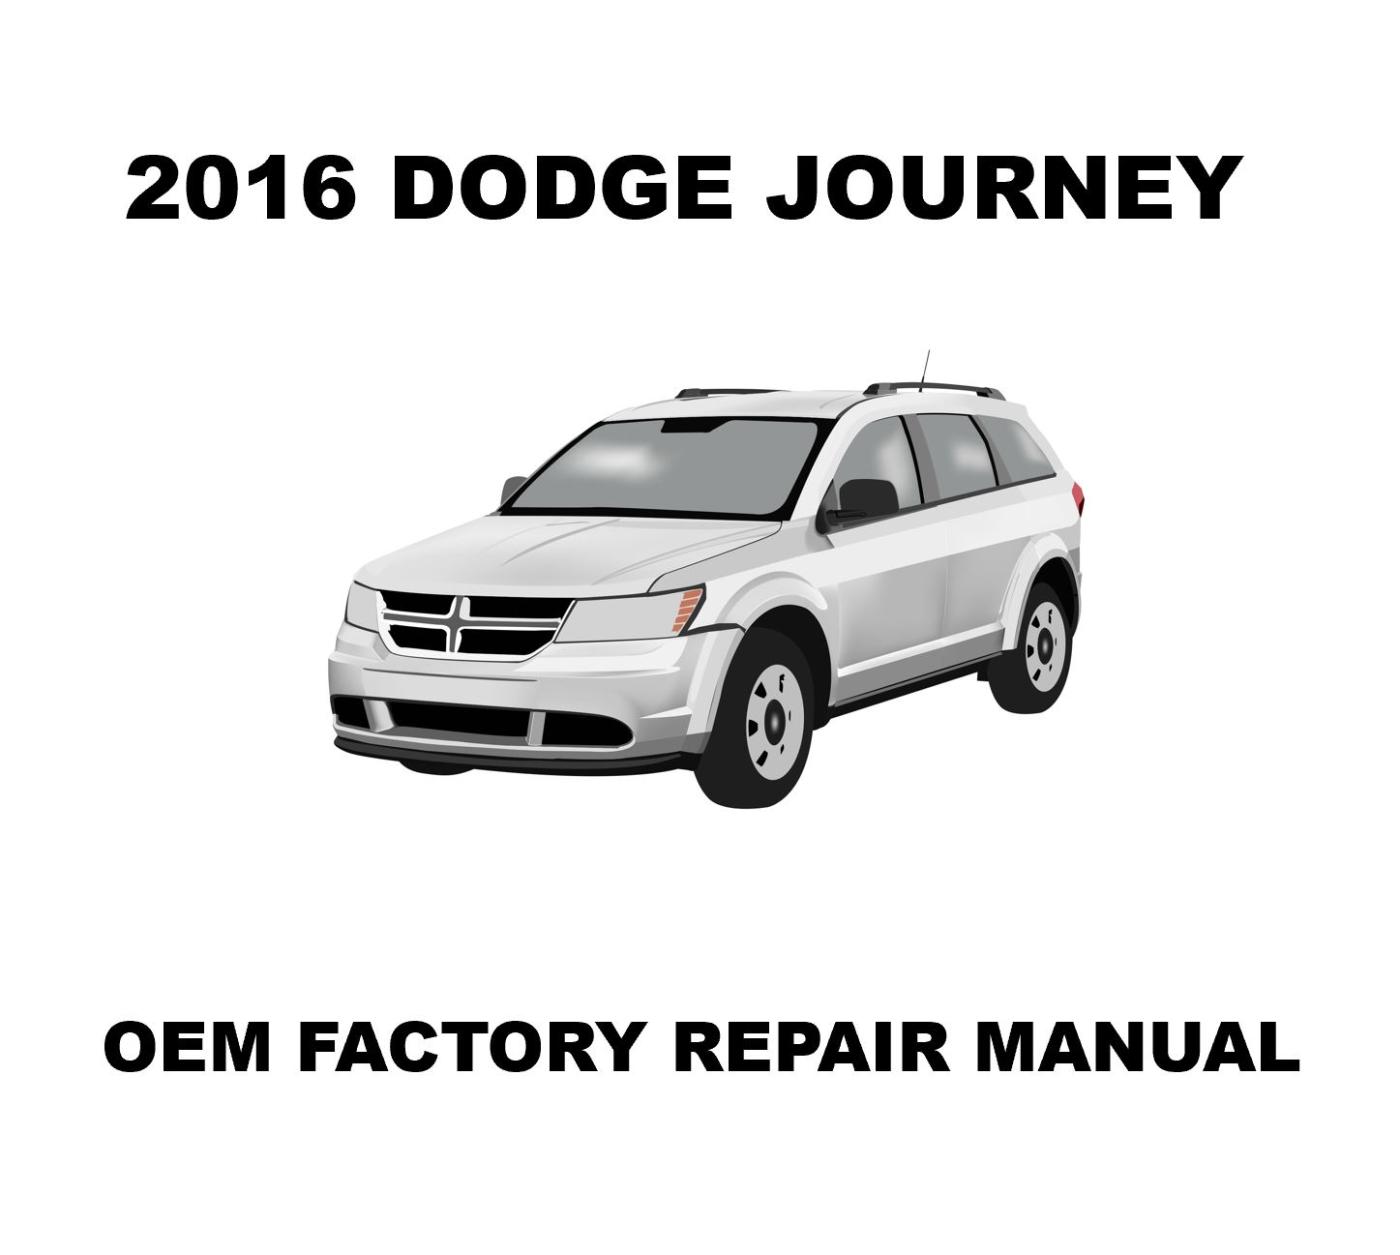 2016 dodge journey service manual pdf